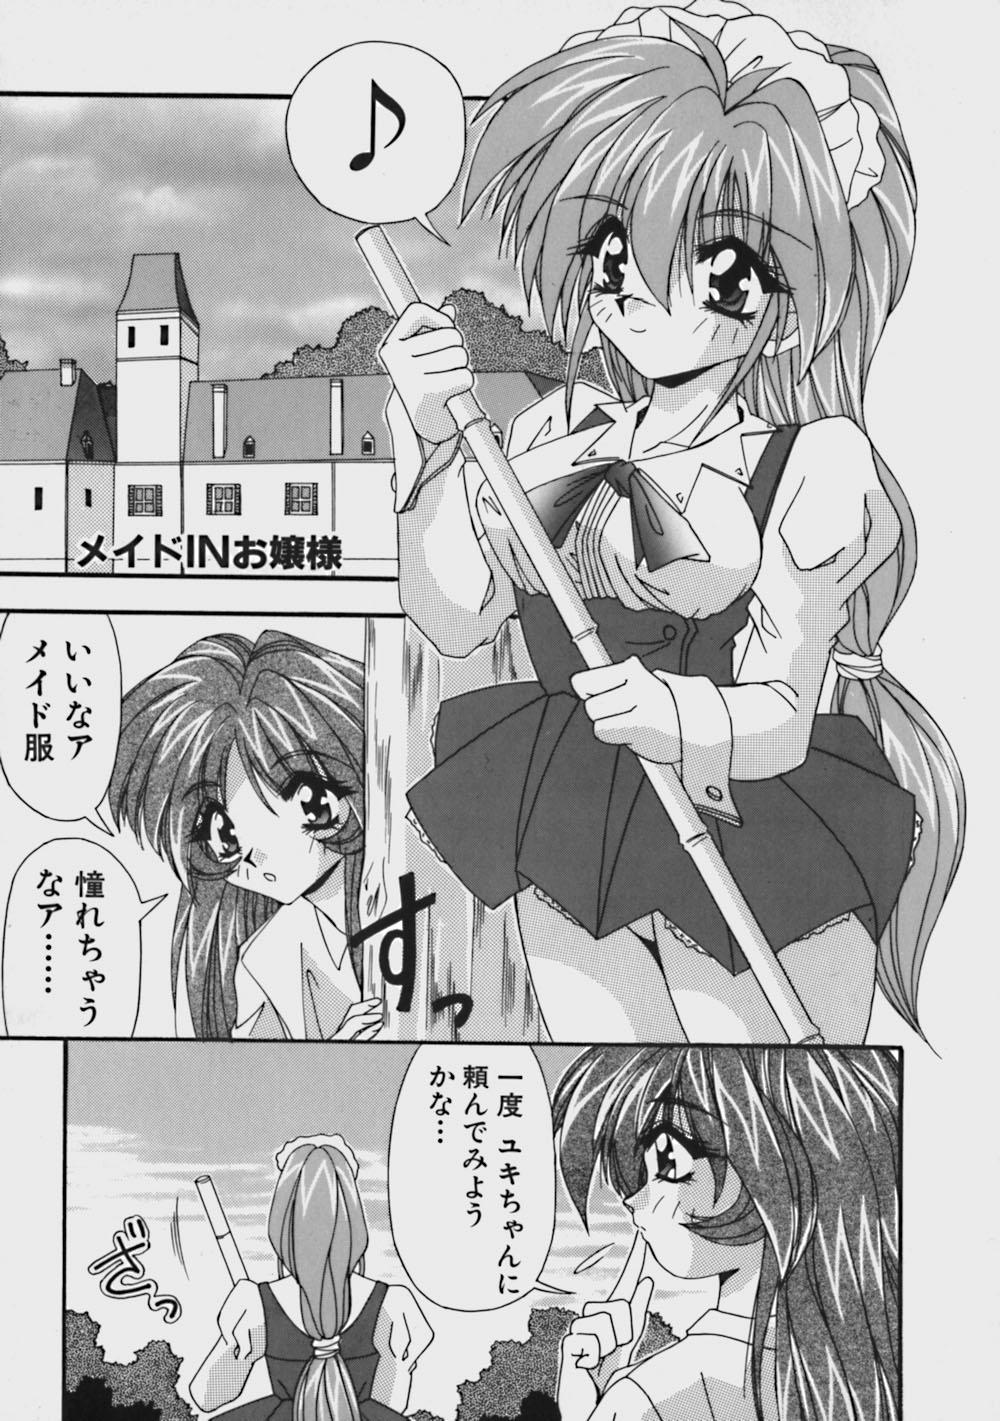 Curious Kimama ni Peach Girl - Selfish Peach Girl Sis - Page 8